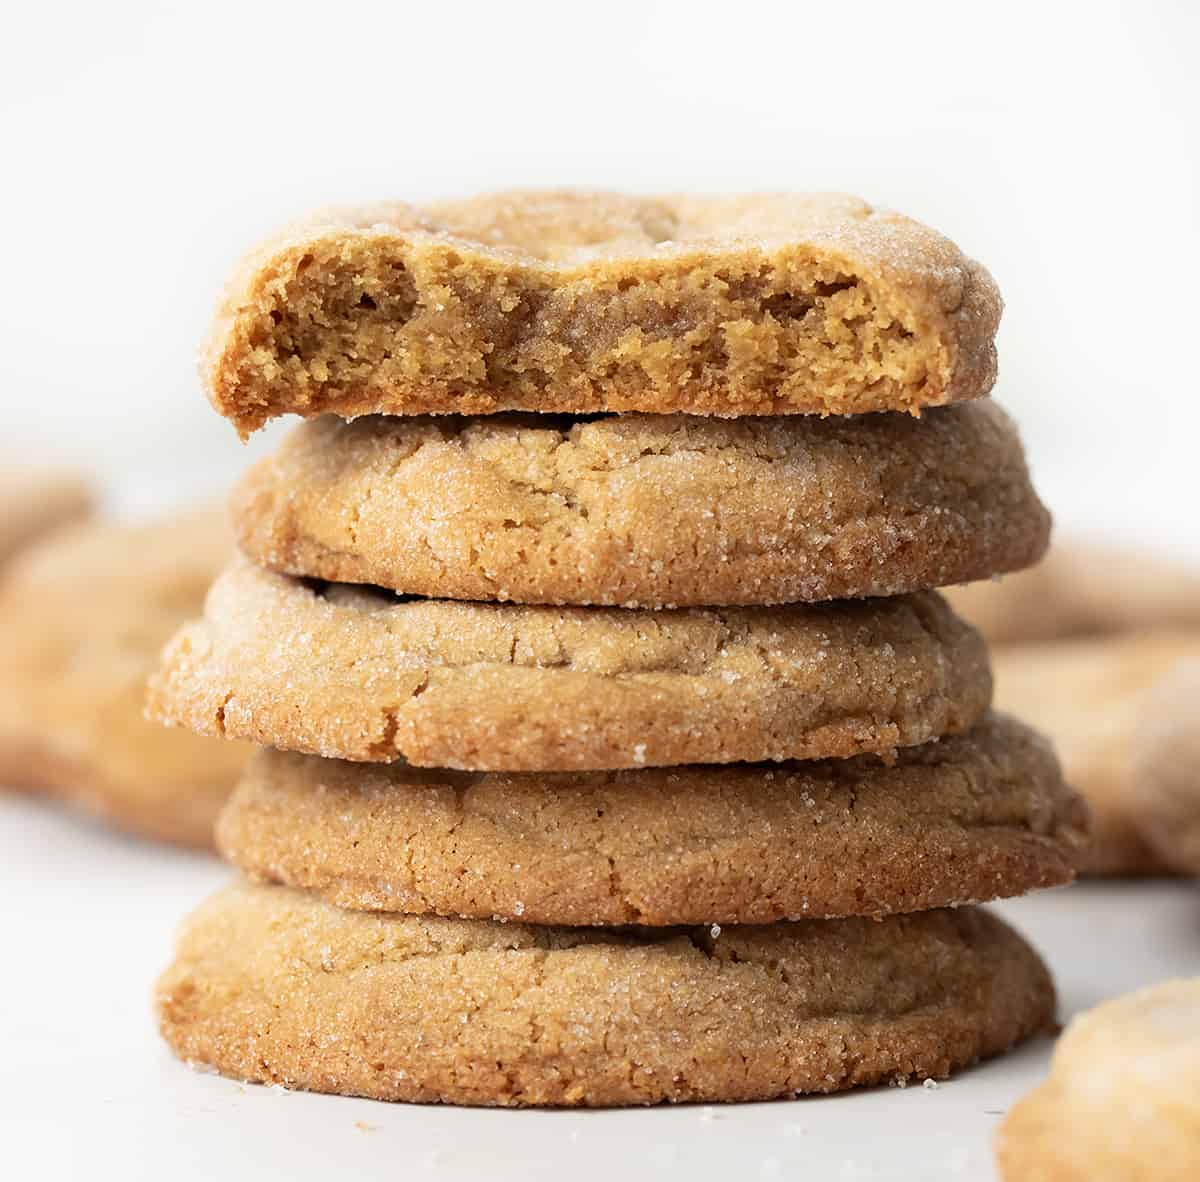 Stack of Chewy Peanut Butter Cookies with Top Cookie Broken in Half Showing Inside TExture.